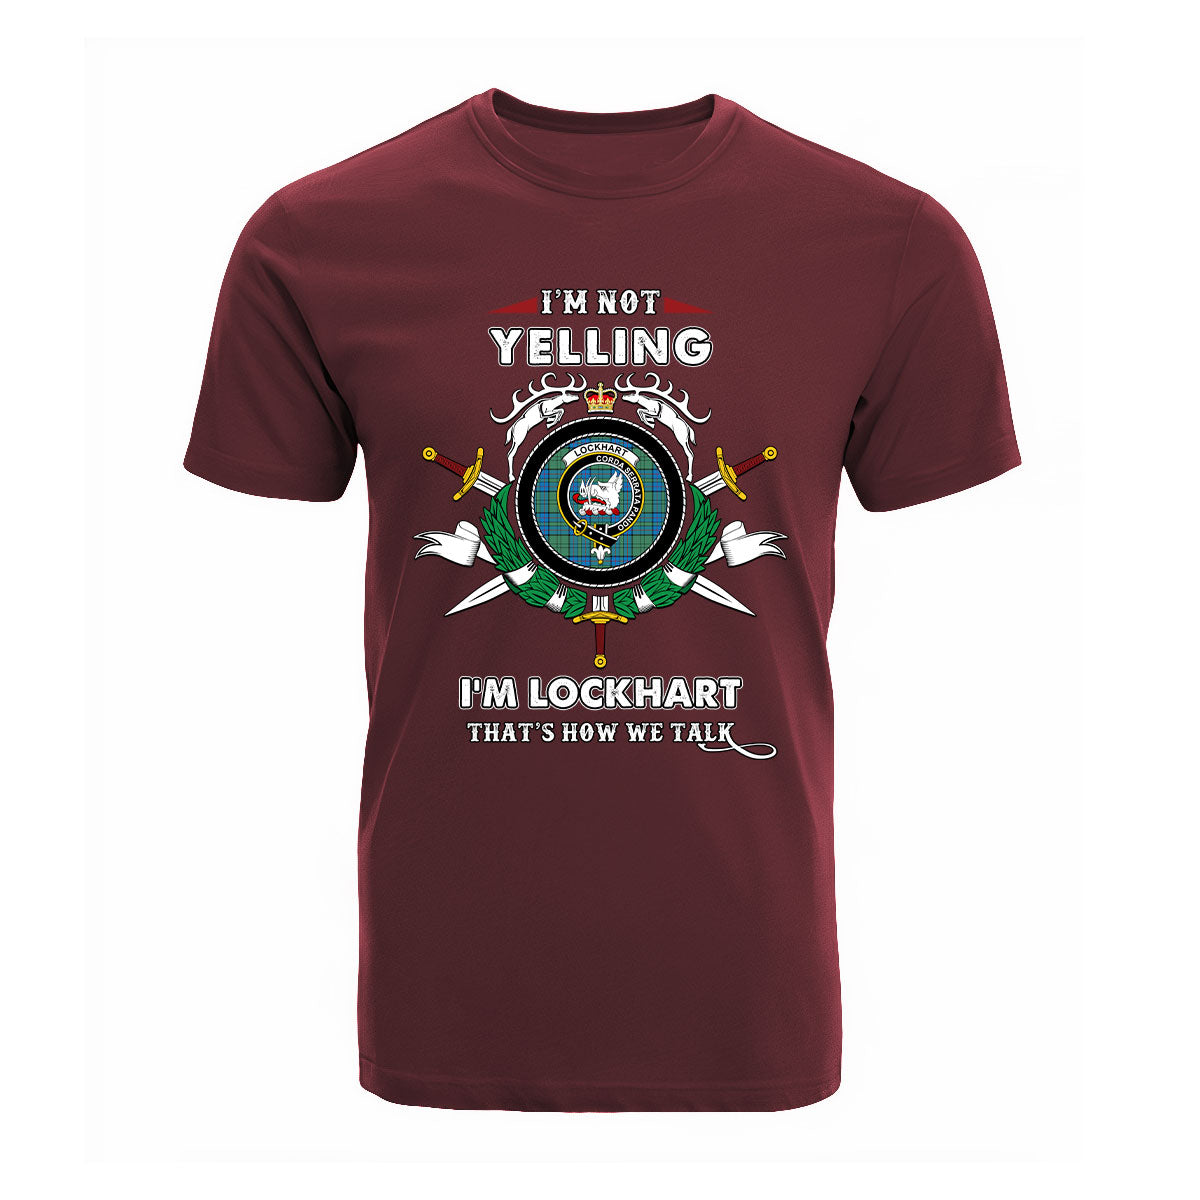 Lockhart Tartan Crest T-shirt - I'm not yelling style